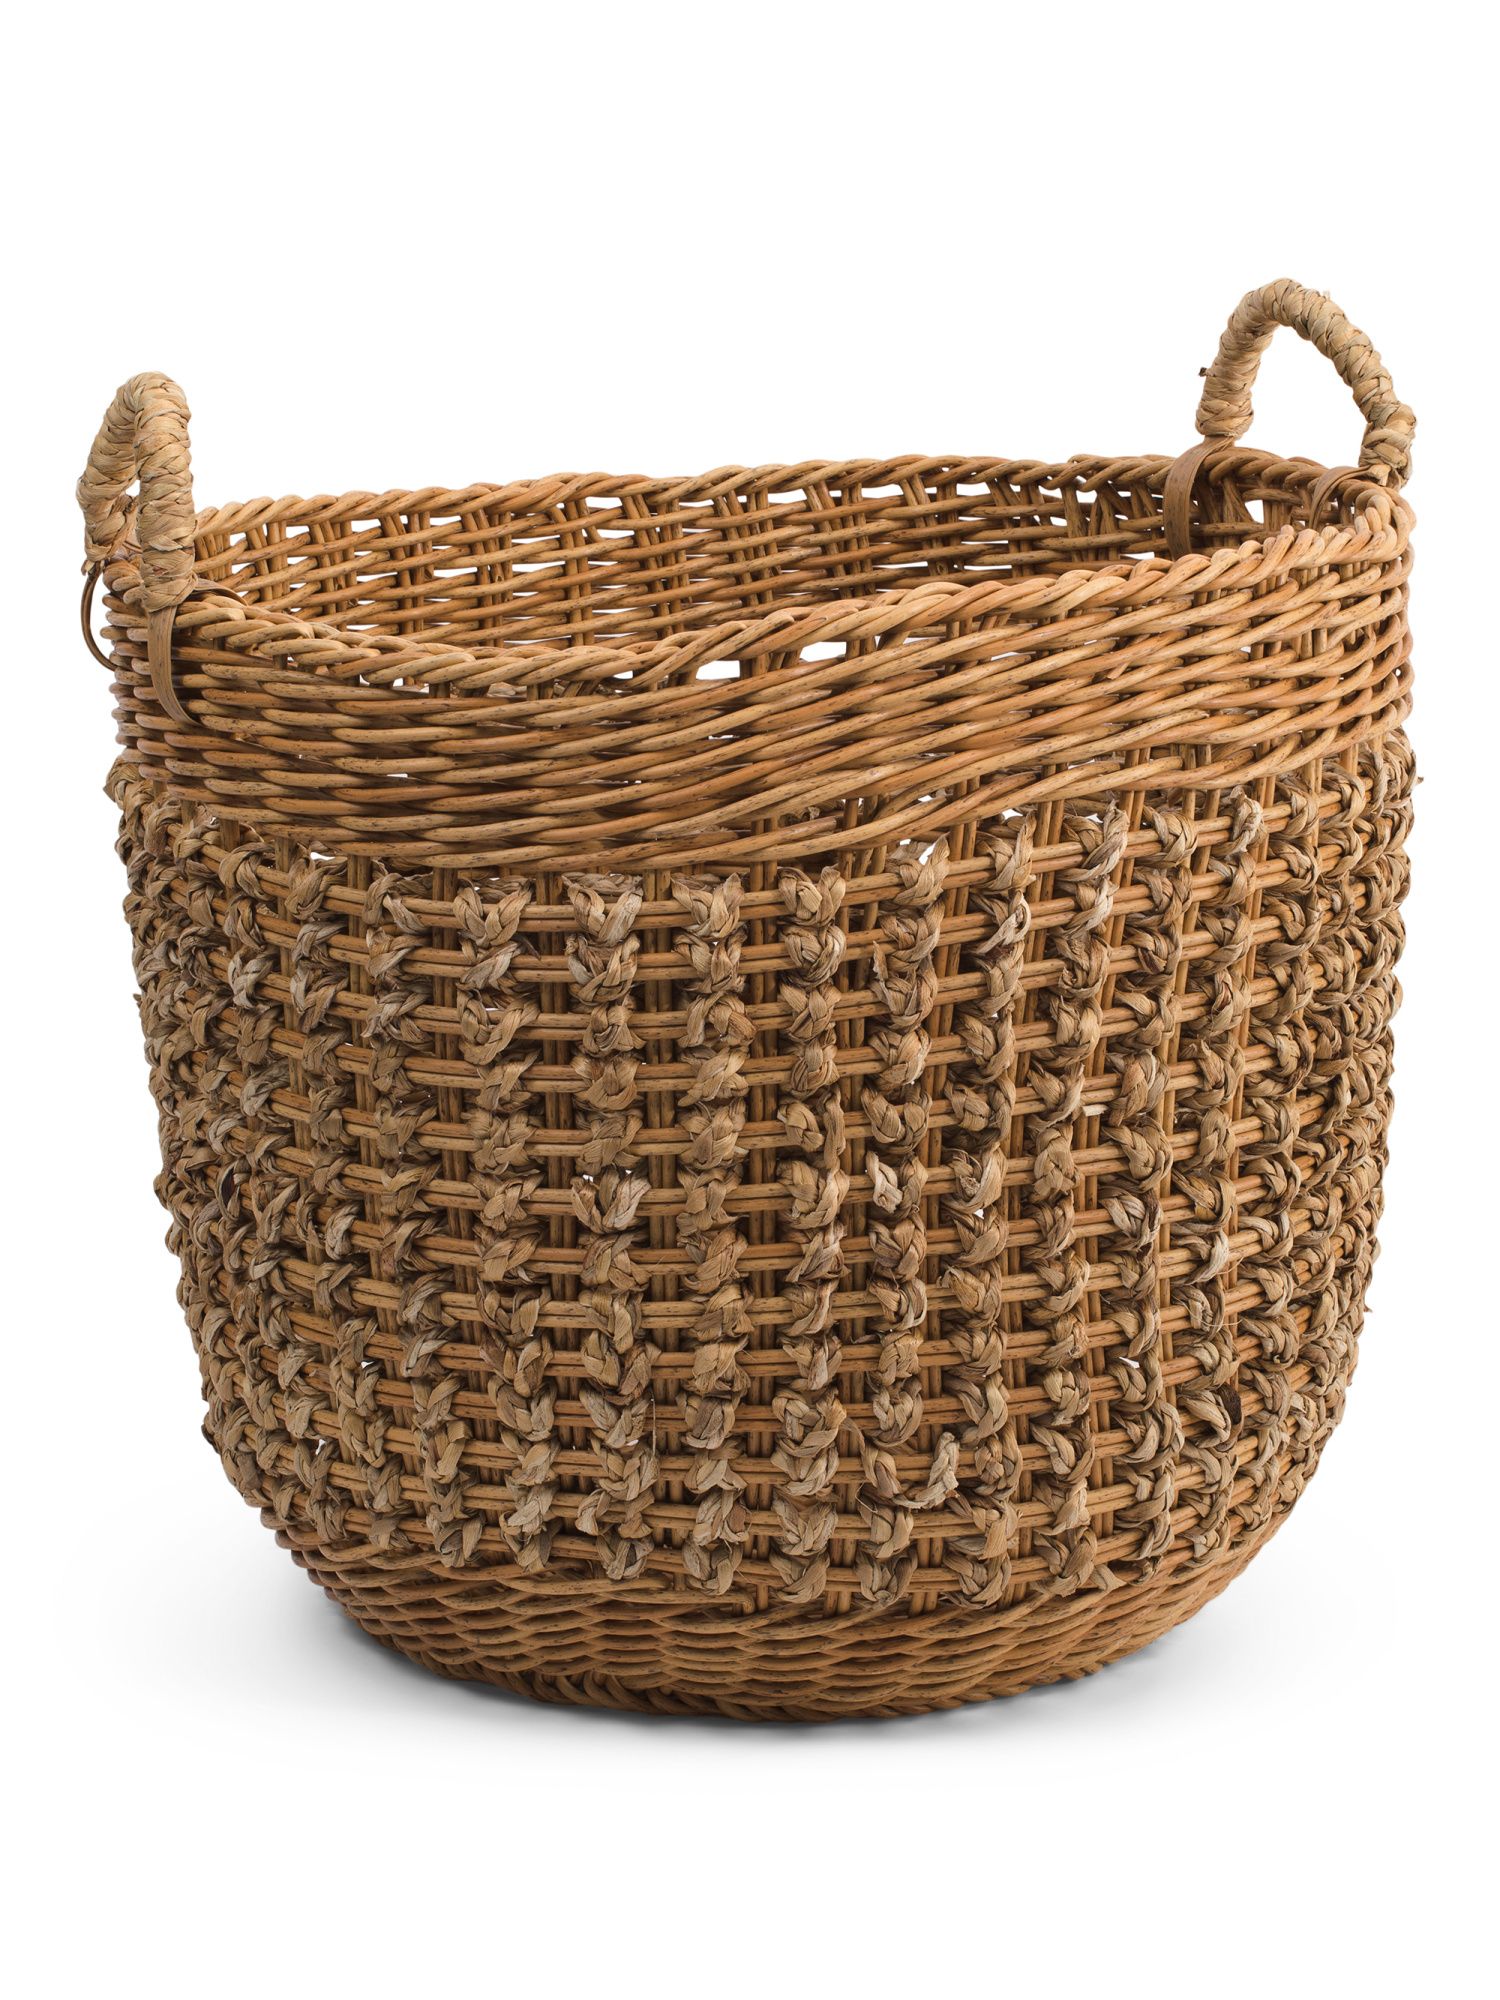 Hyacinth Storage Basket | TJ Maxx